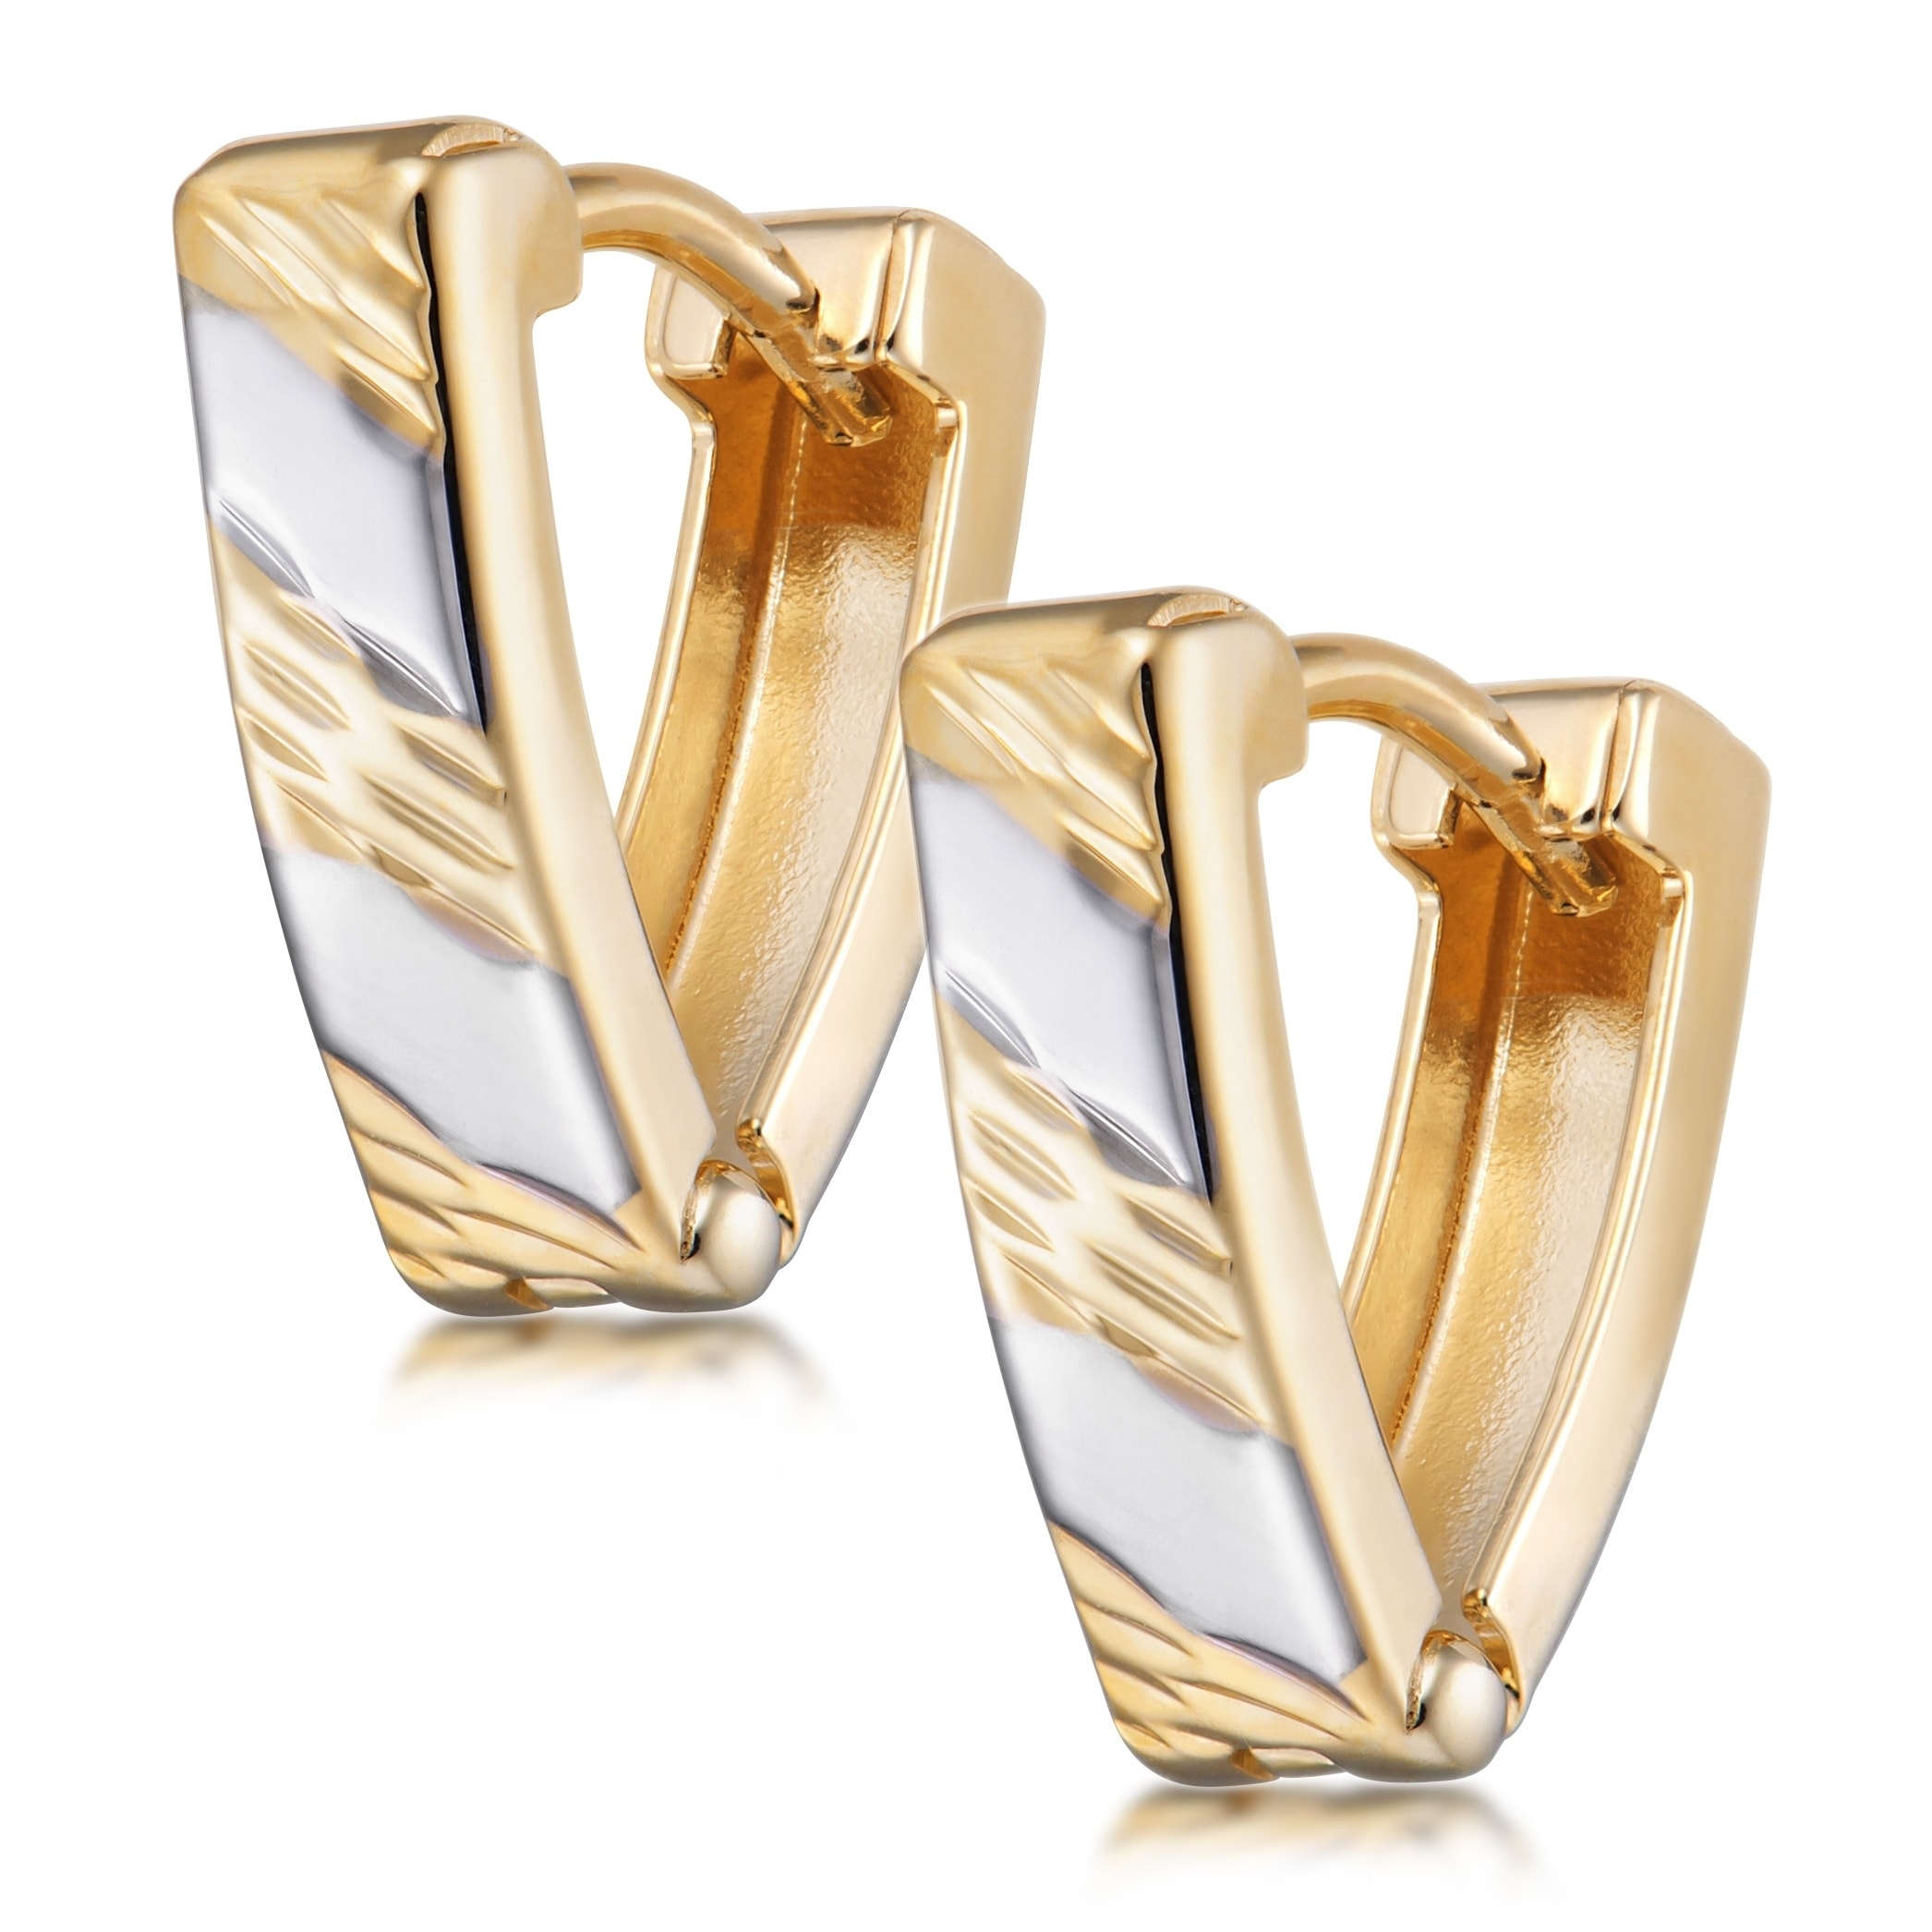 Gold huggie earrings diamond cut 9 carat yellow and white